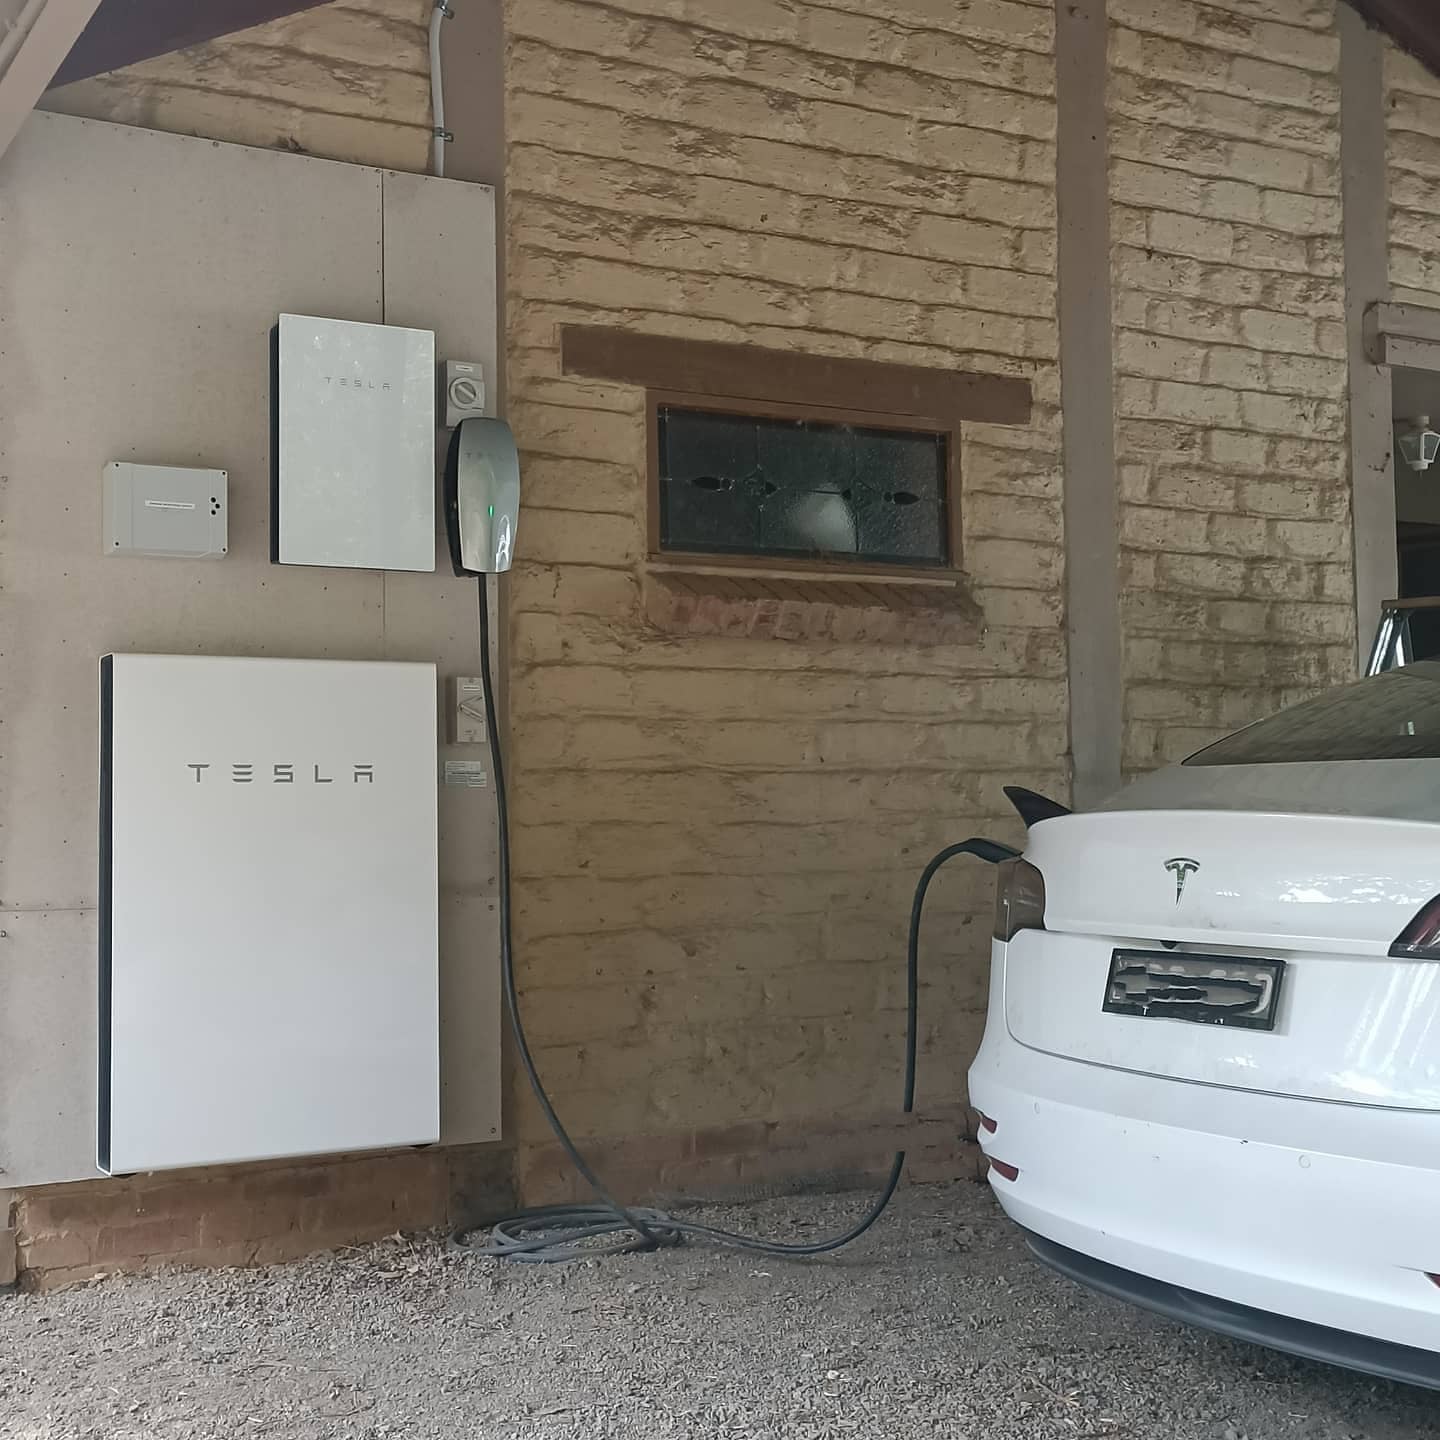 Jet Solar Pty Ltd Tesla Powerwall and EV charger